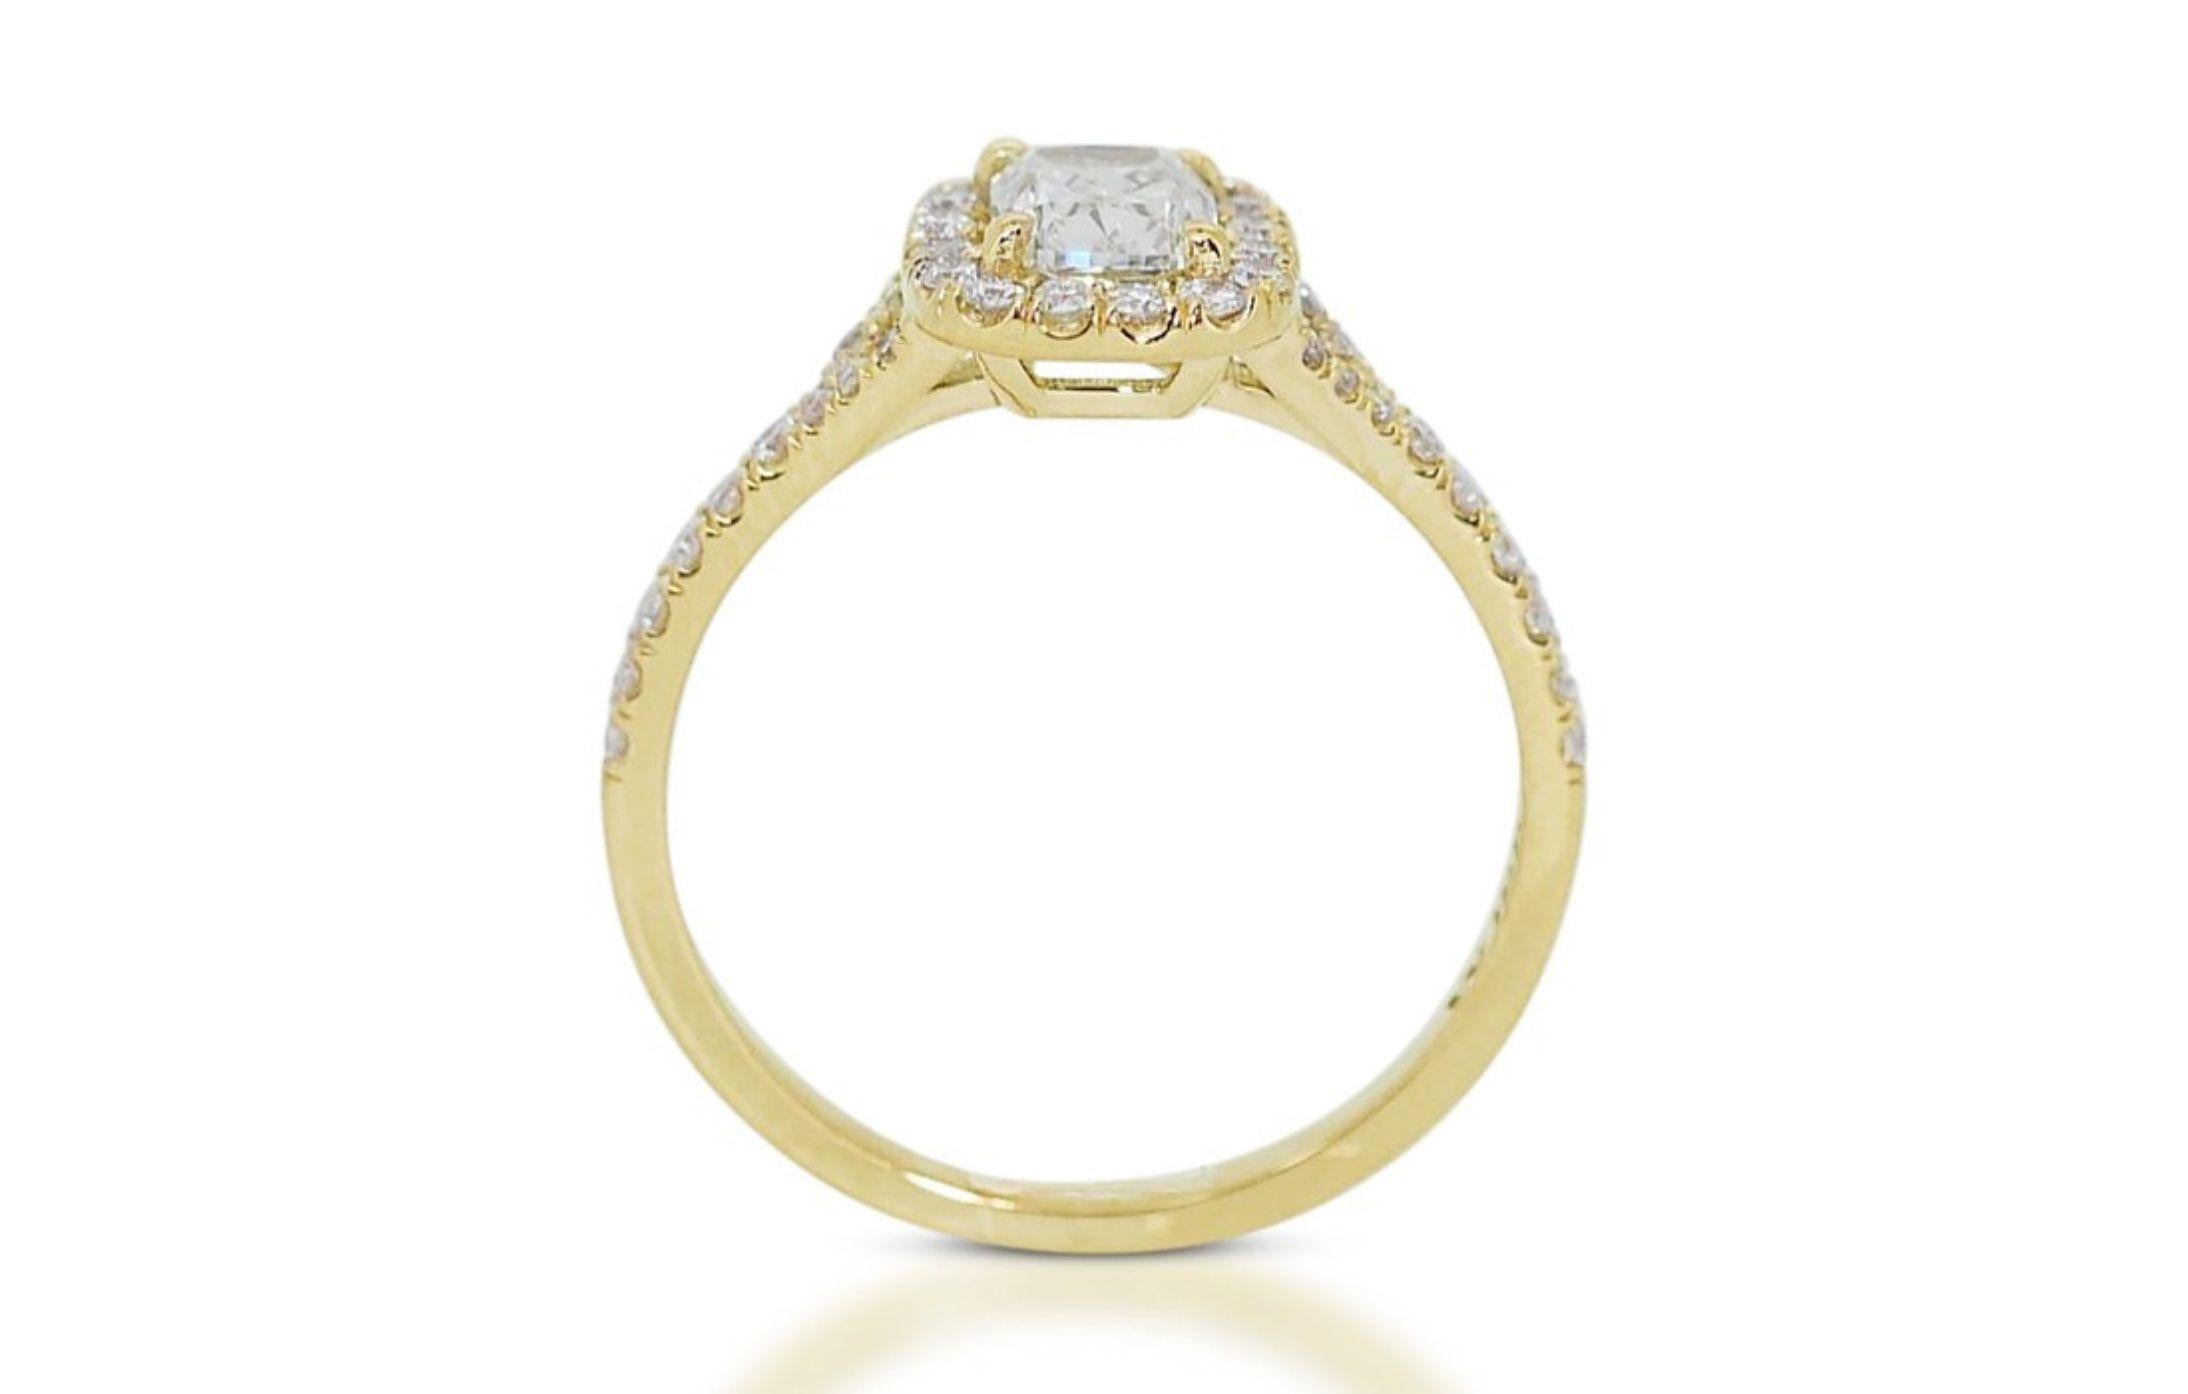 Stunning 0.75ct Cushion-cut Diamond Pave Ring in 18K Yellow Gold 1